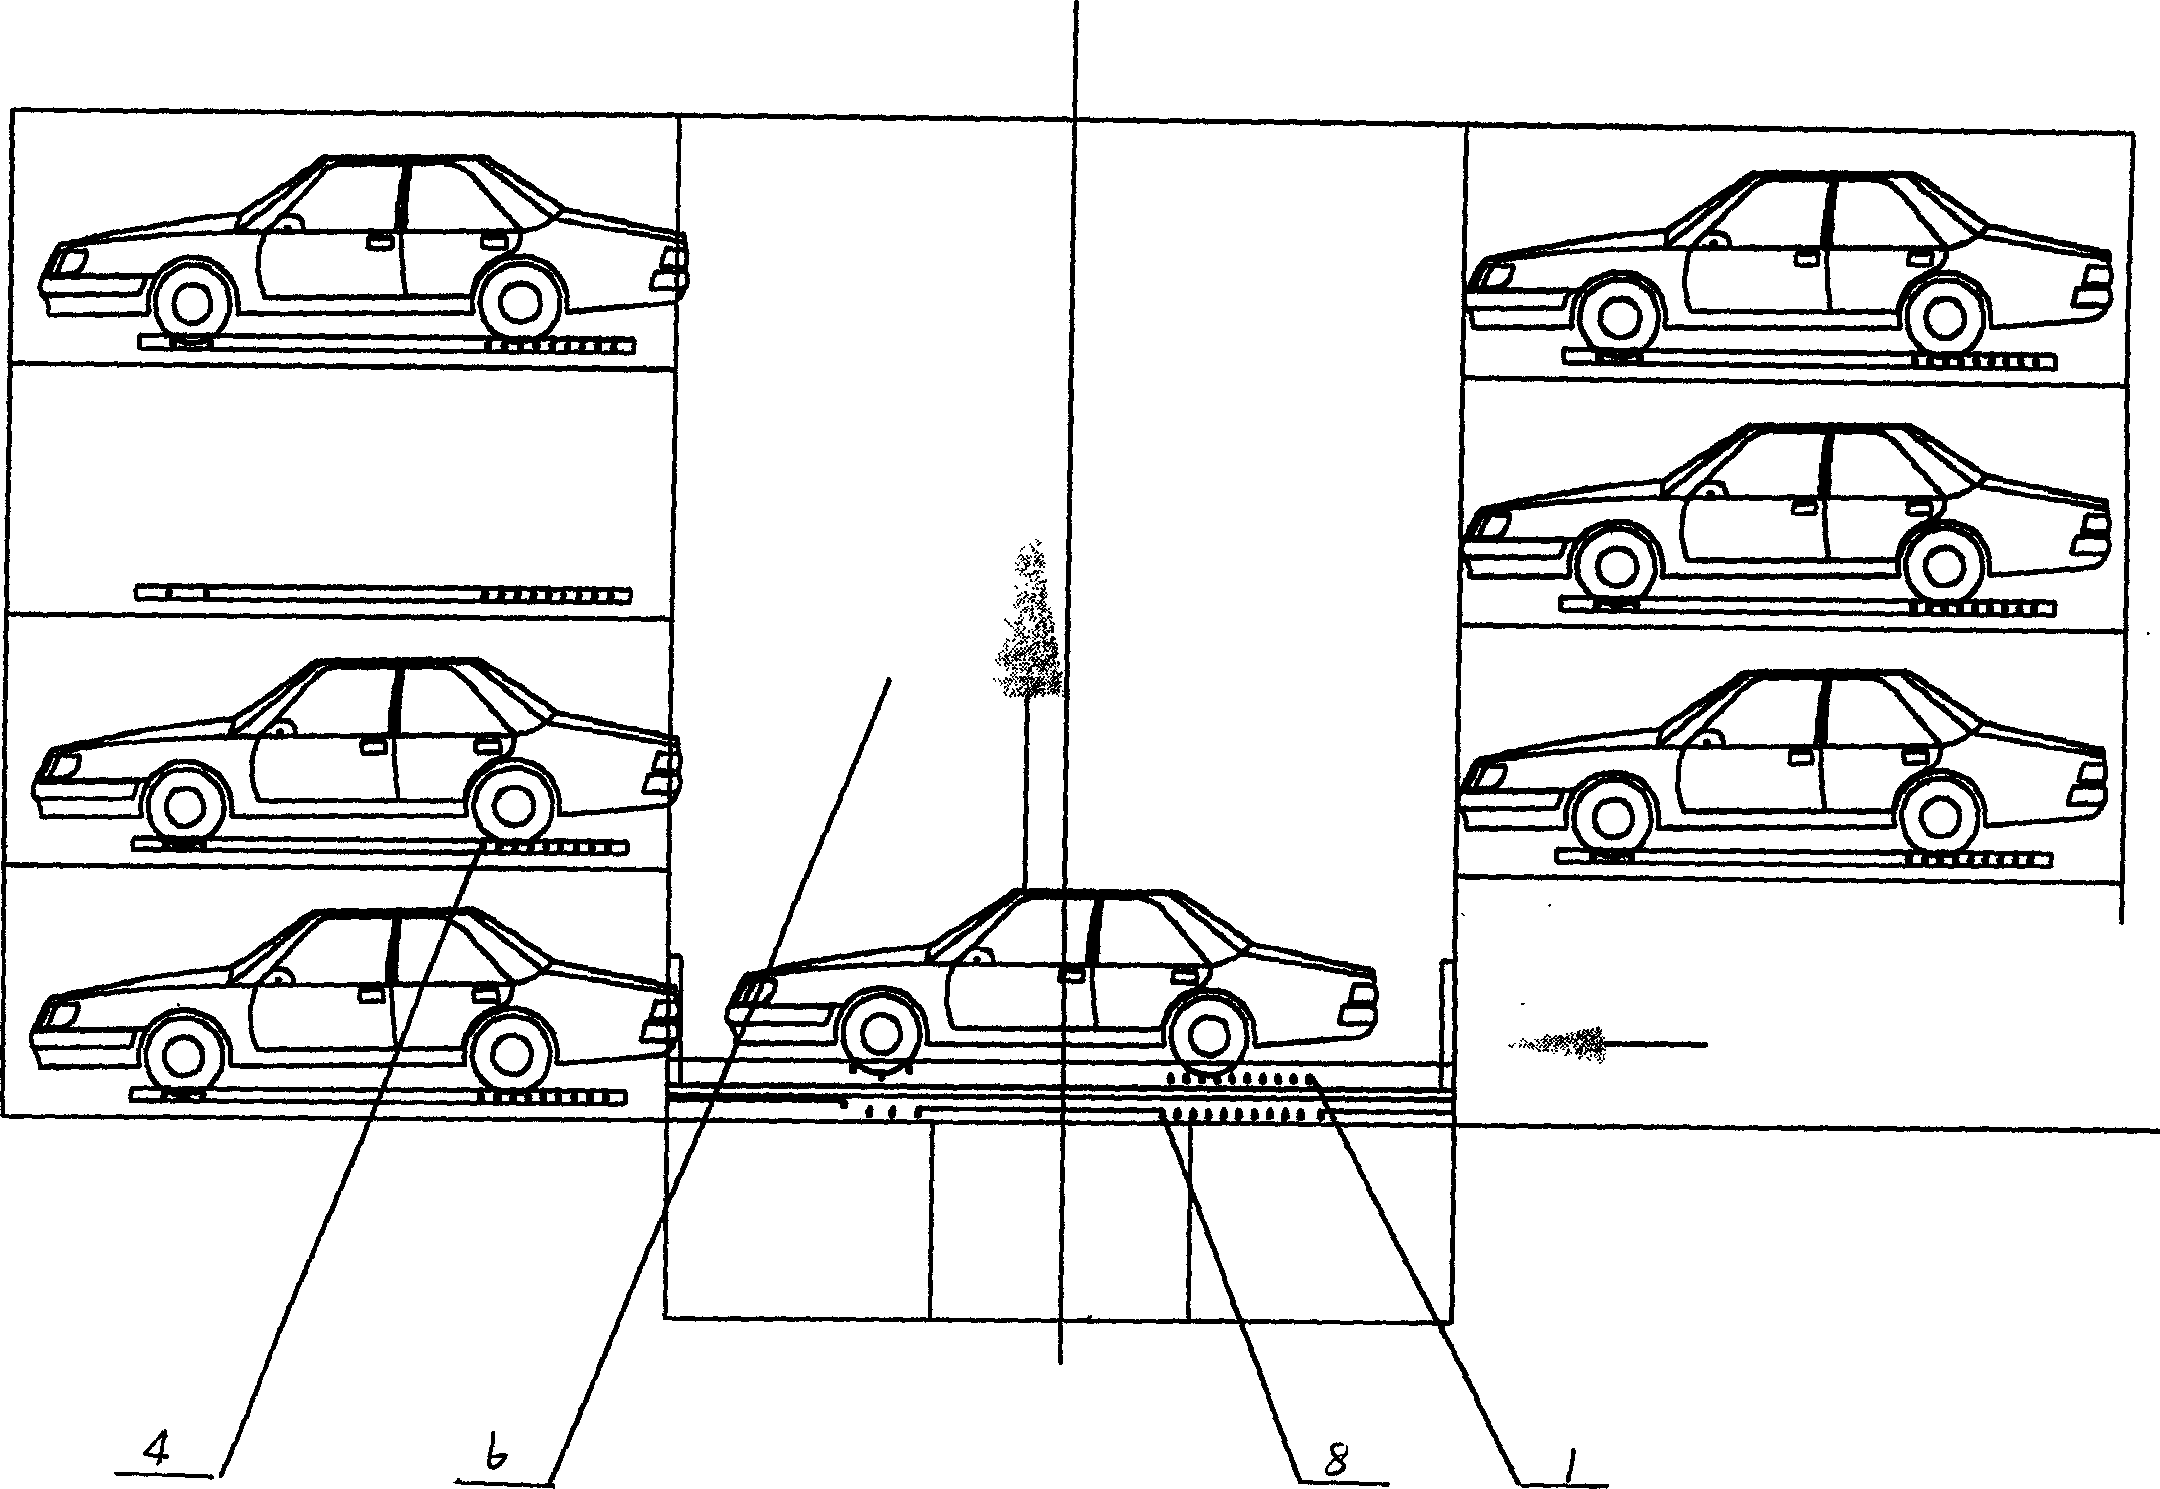 Horizontal mobile parking equipment